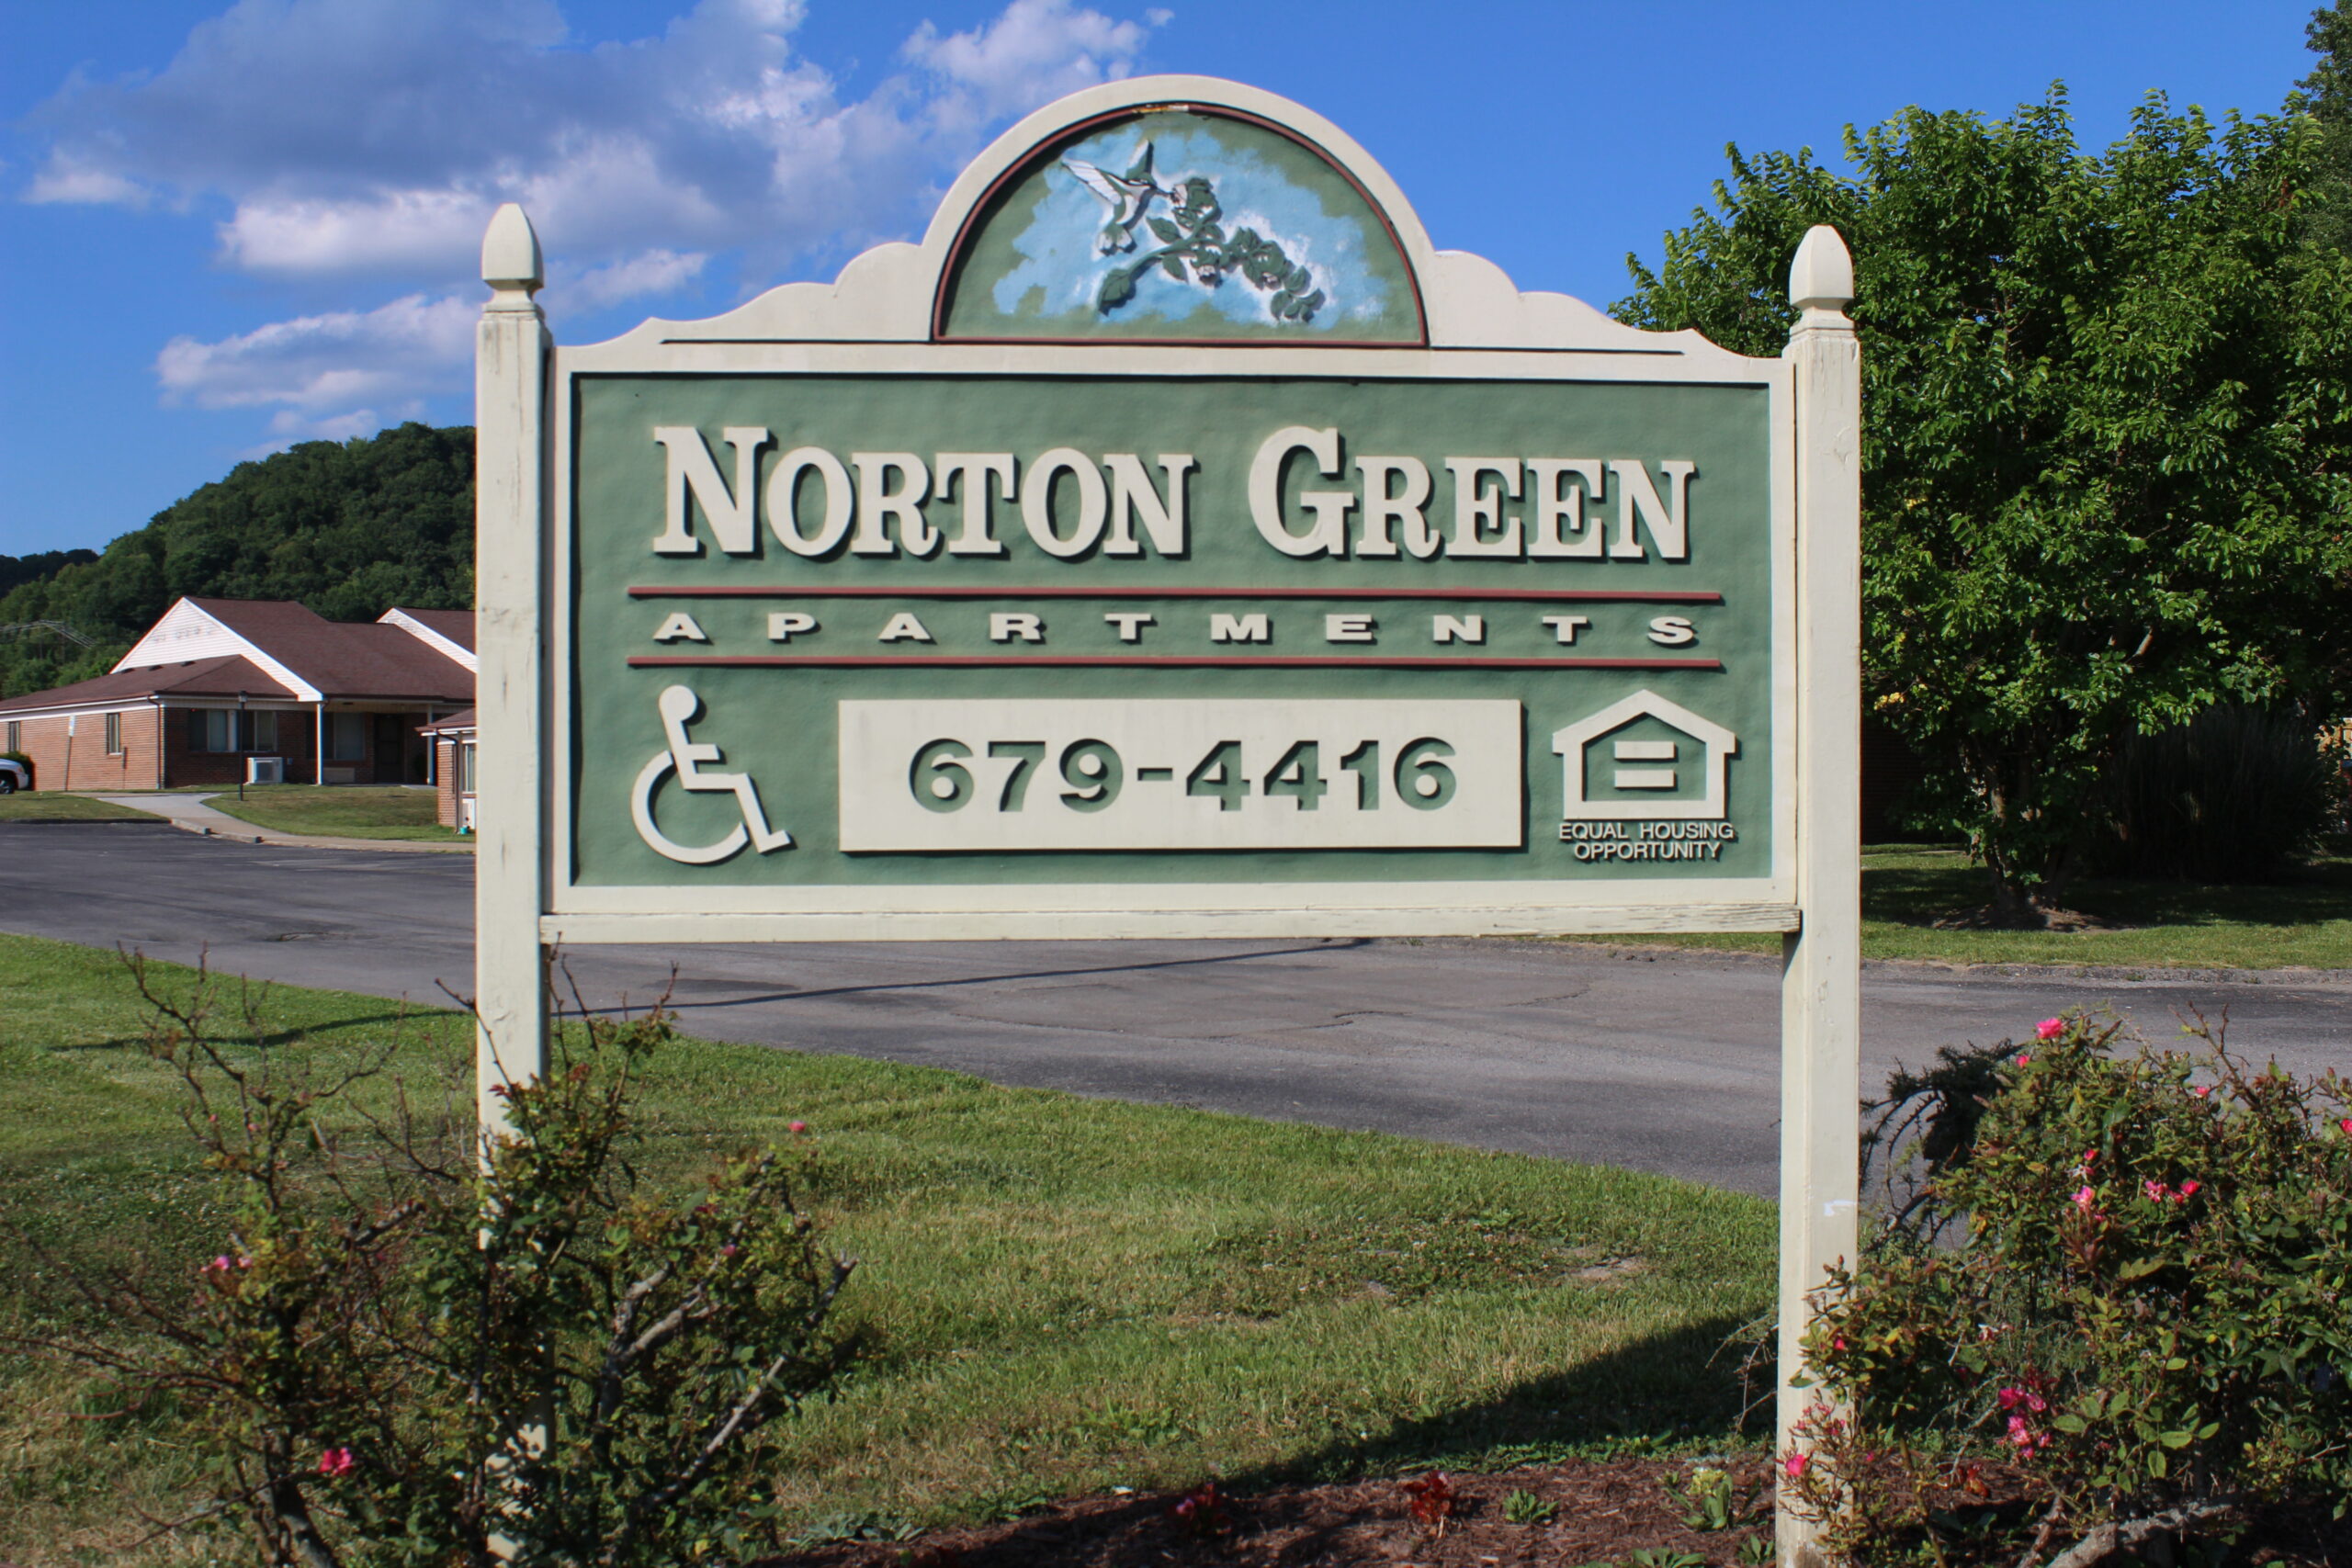 NORTON GREEN APARTMENTS